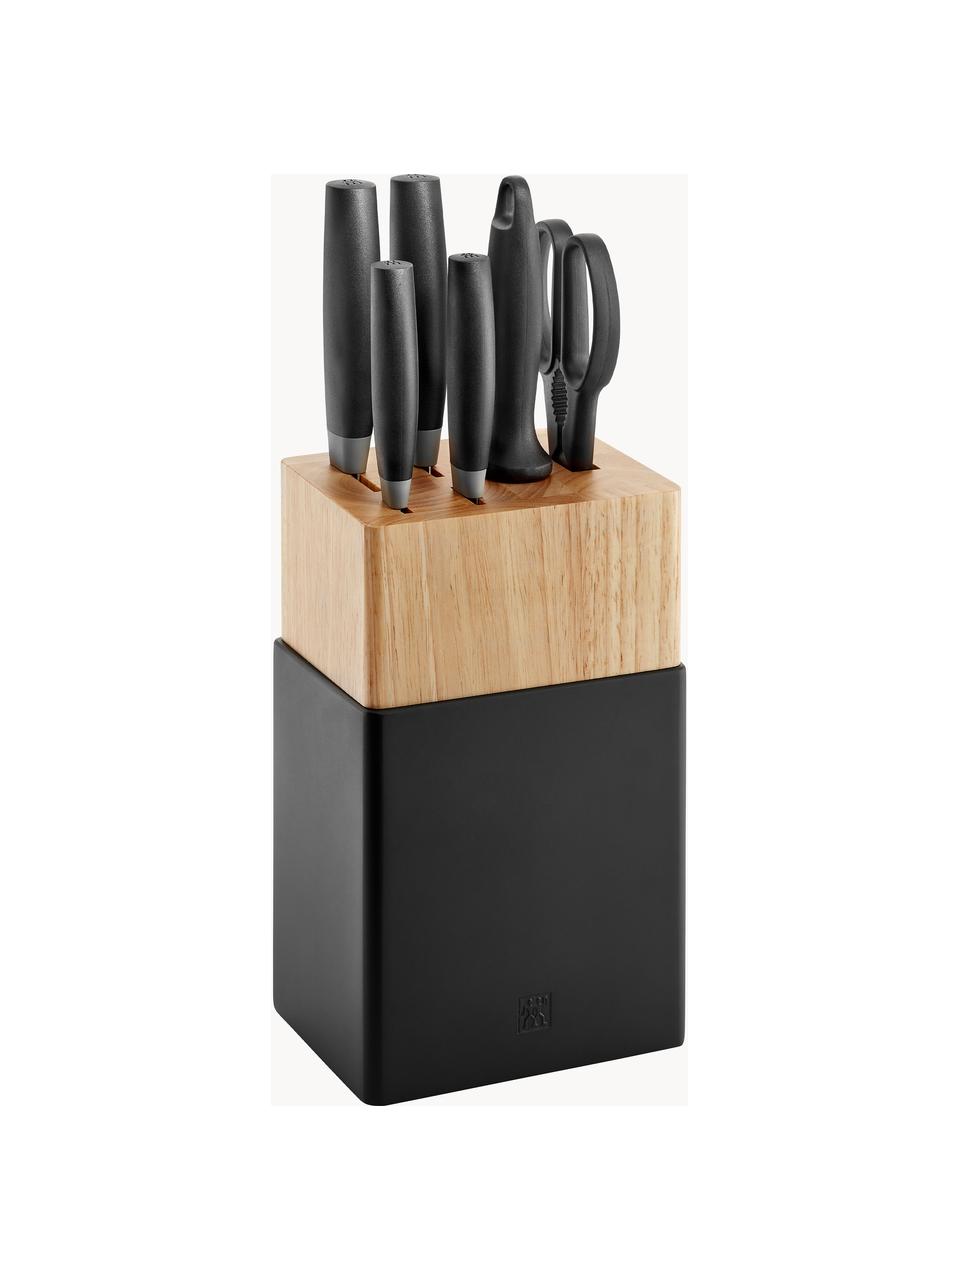 Bloque de cuchillos de madera de caucho Now, 7 uds., Madera de caucho, negro, plateado, Set de diferentes tamaños